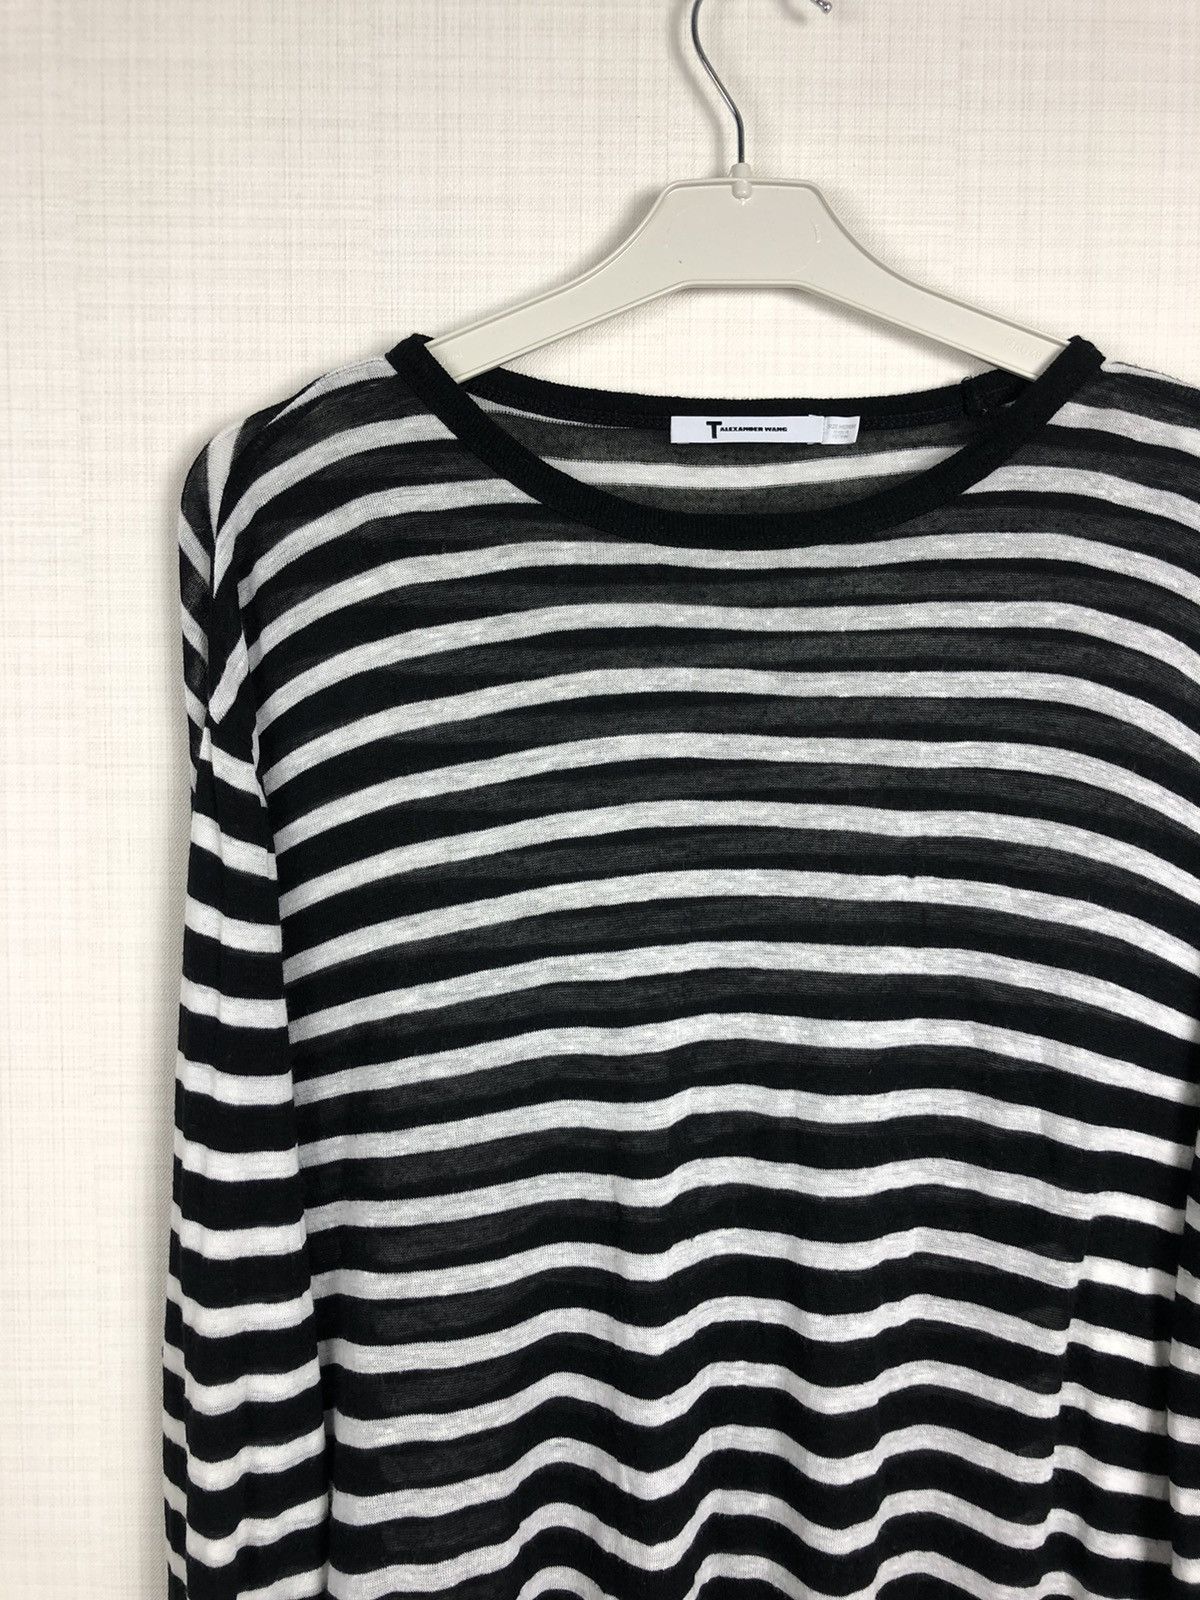 Rare T Alexander Wang Striped Sweater Long Sleeve ThIn Black Logo Size US M / EU 48-50 / 2 - 4 Thumbnail